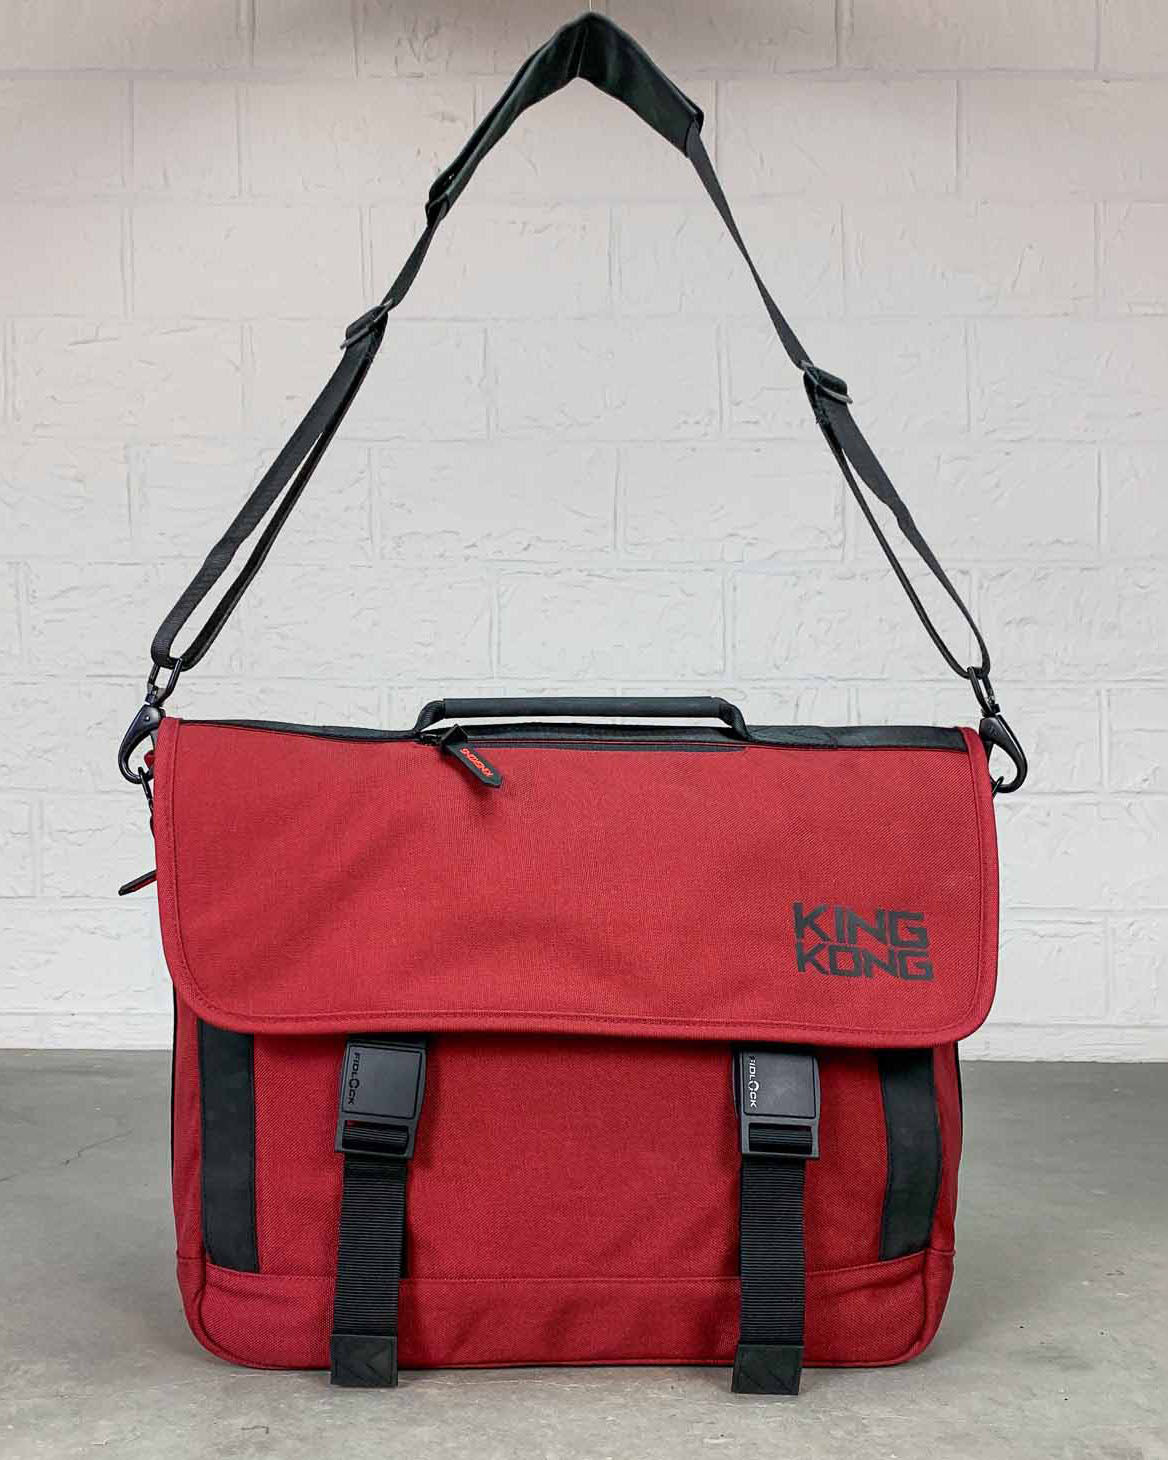 Manhattan Portage offers messenger bags, shoulder bags, laptop